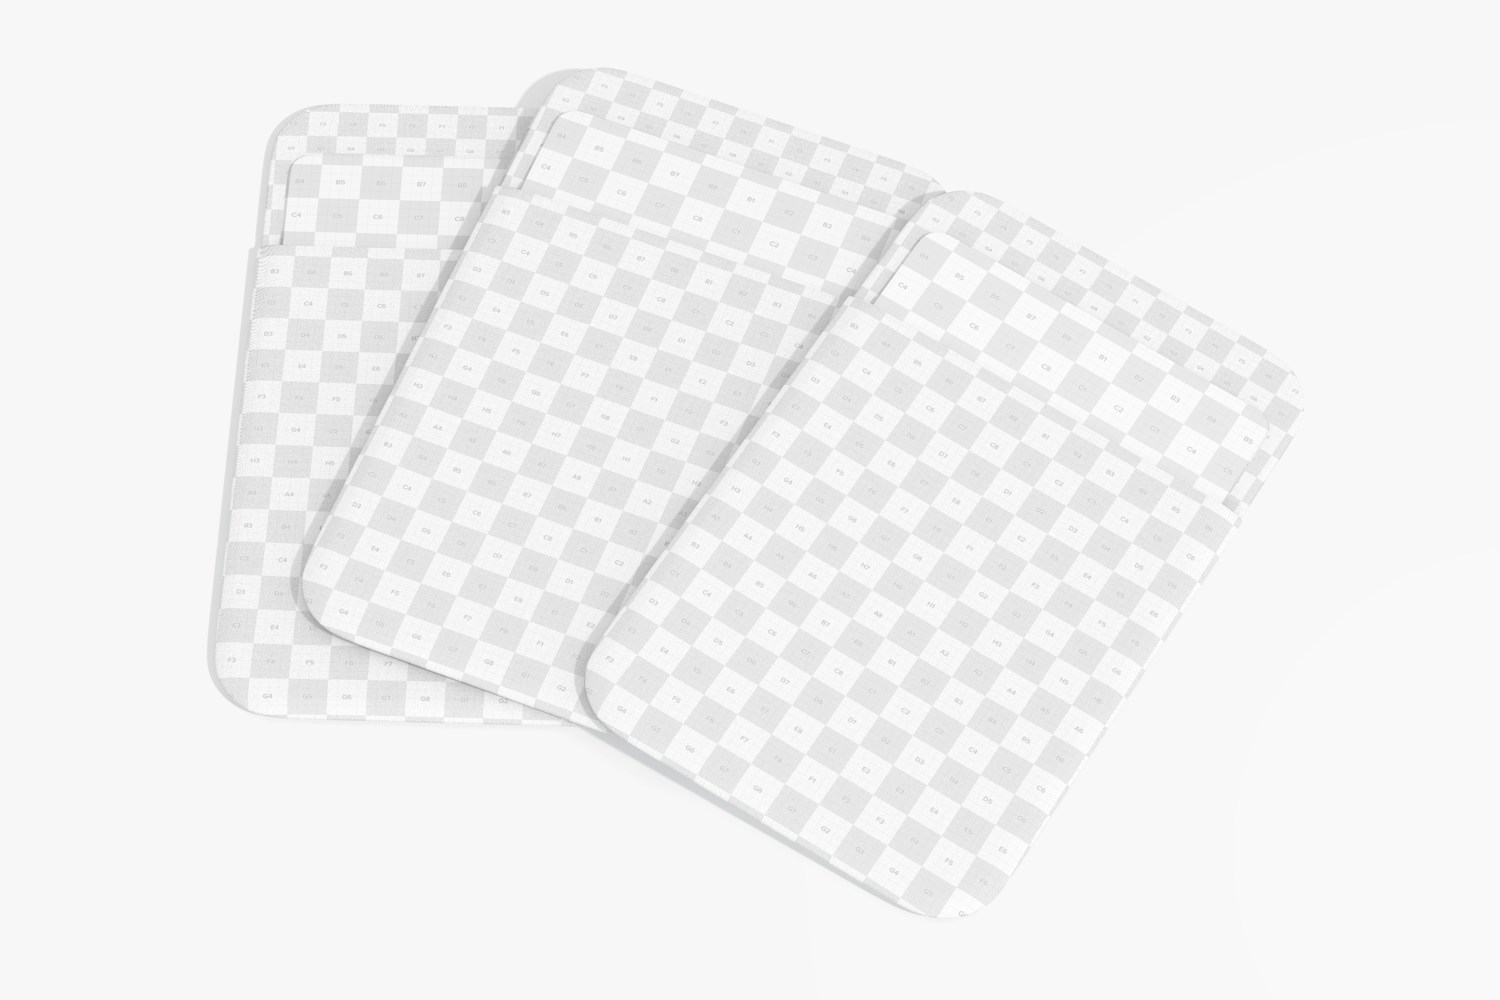 Adhesive Pocket with Card Mockup, Stacked